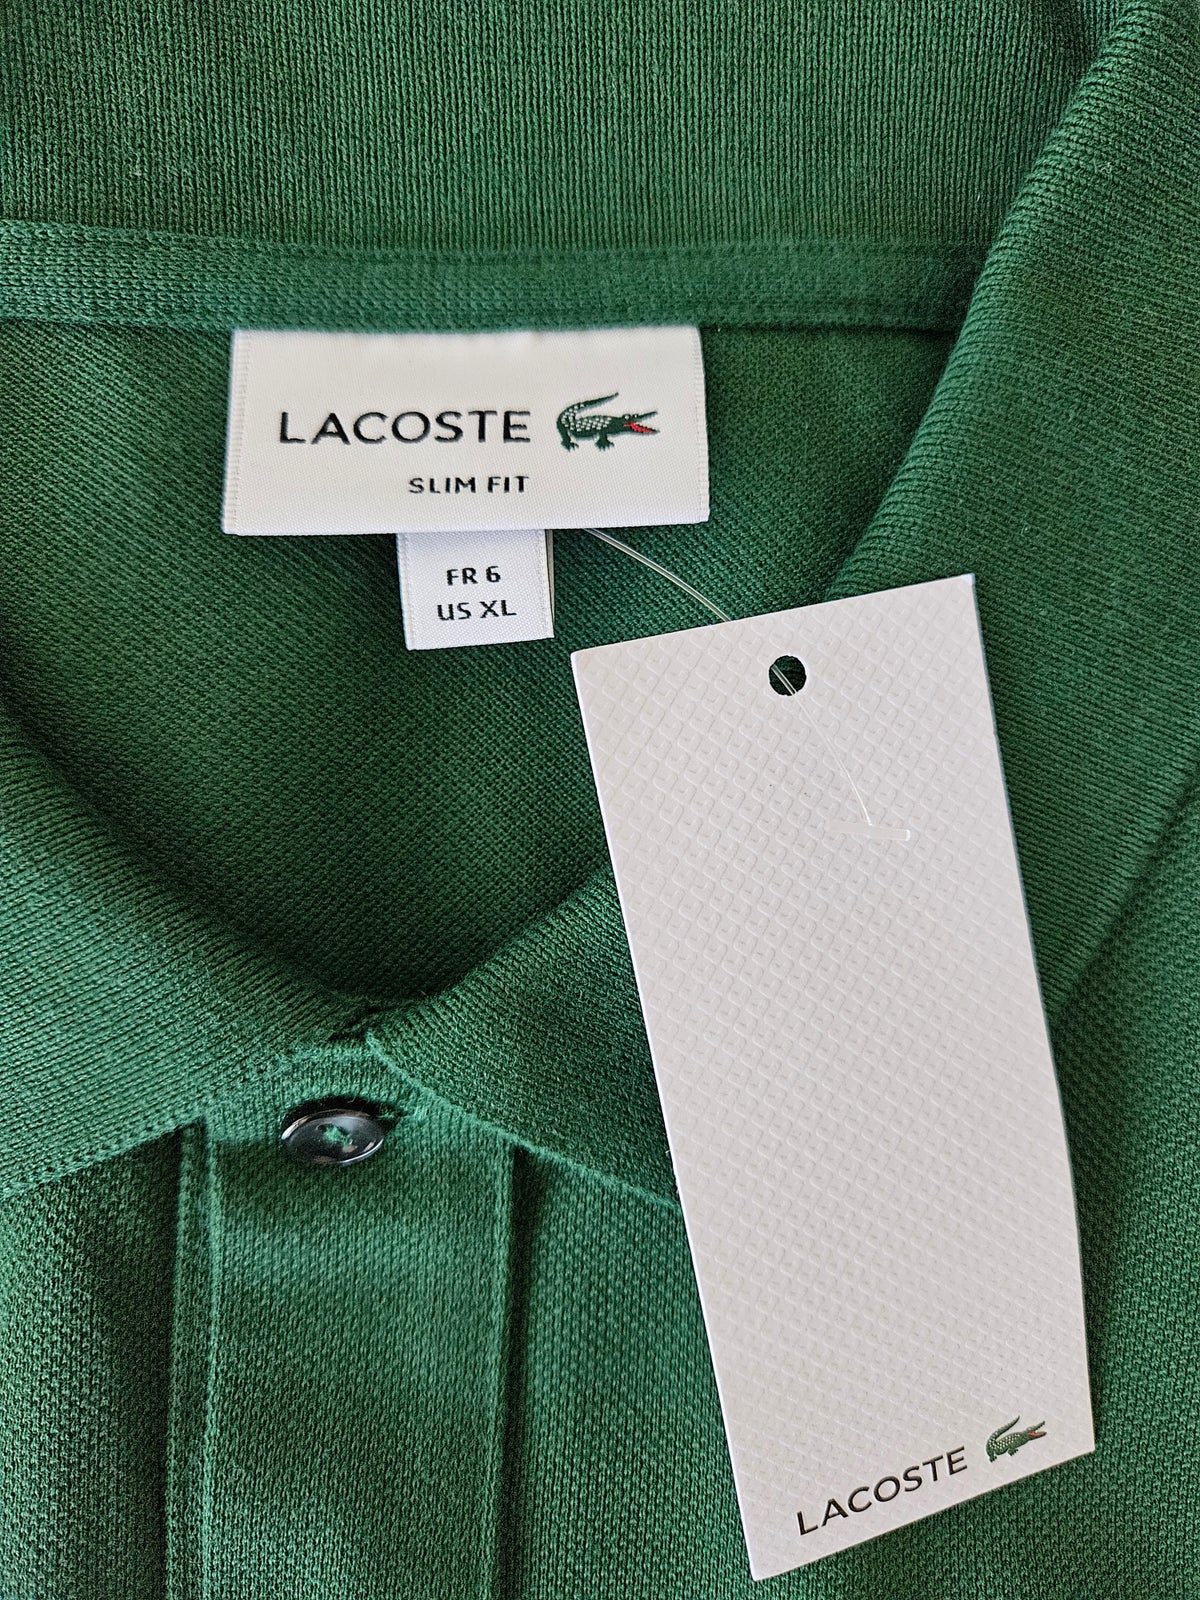 Polo t-shirt, Lacoste, str. XL